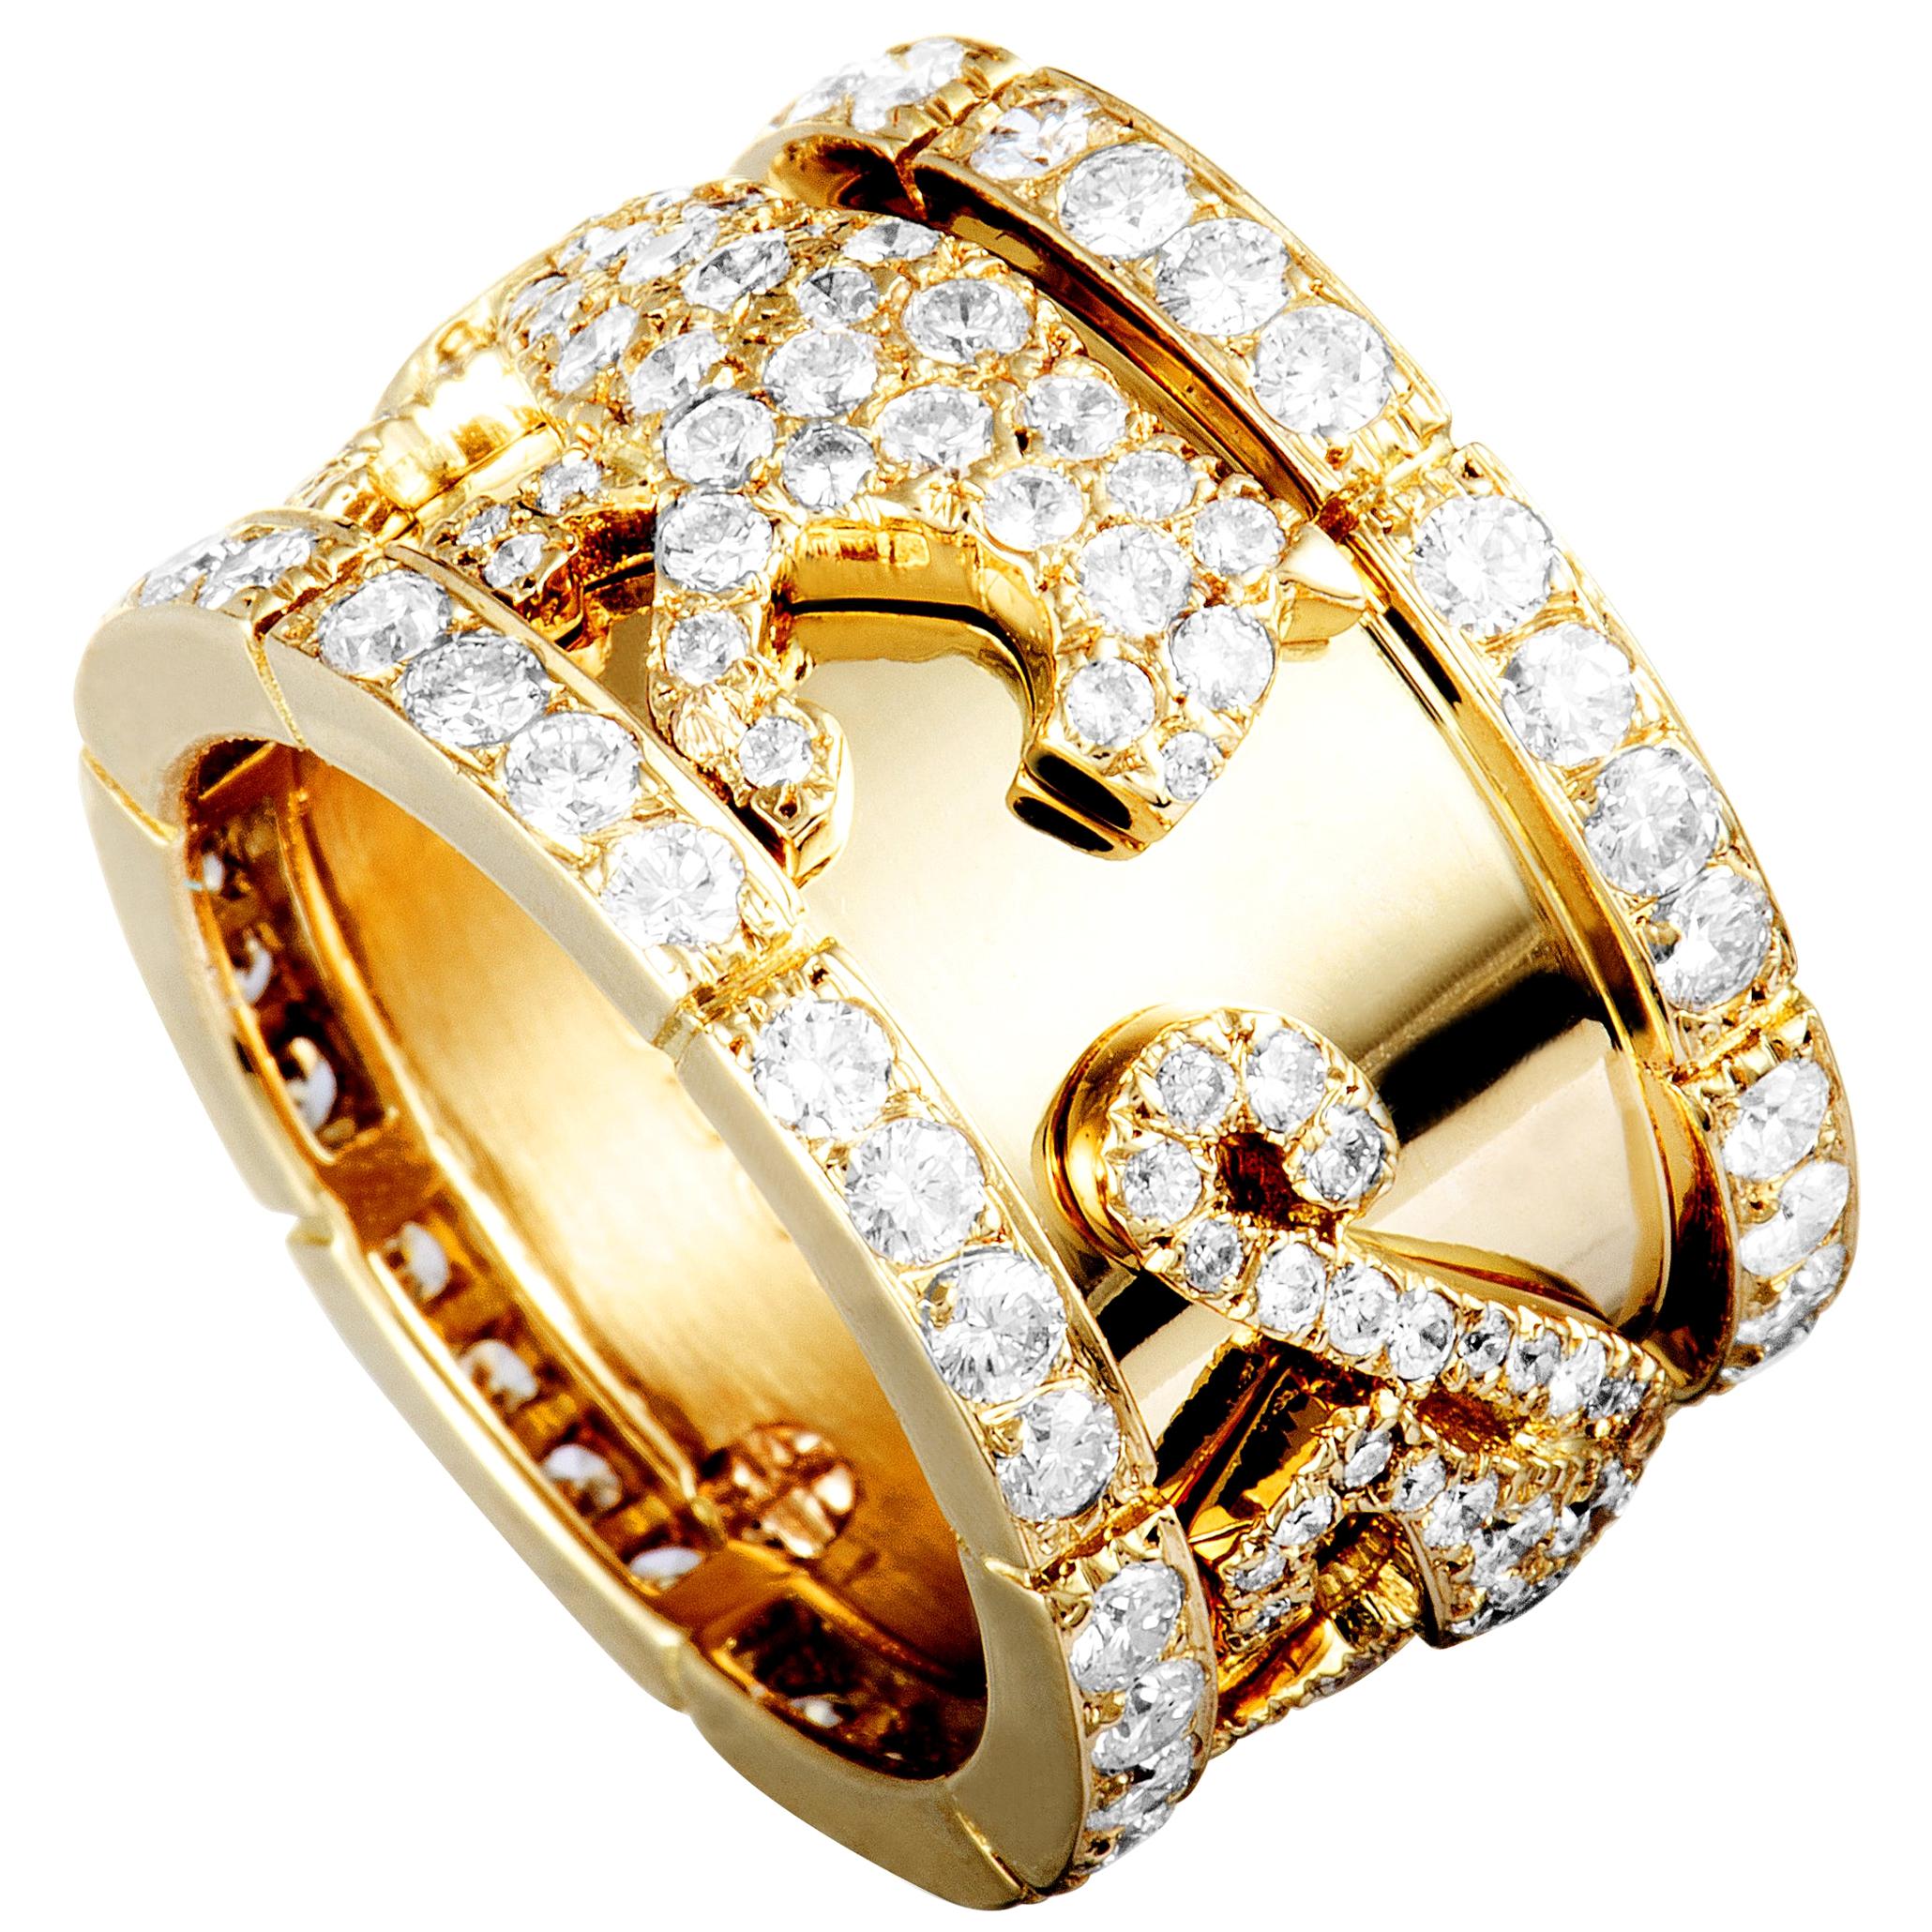 Cartier Panthère 18 Karat Yellow Gold Diamond Band Ring